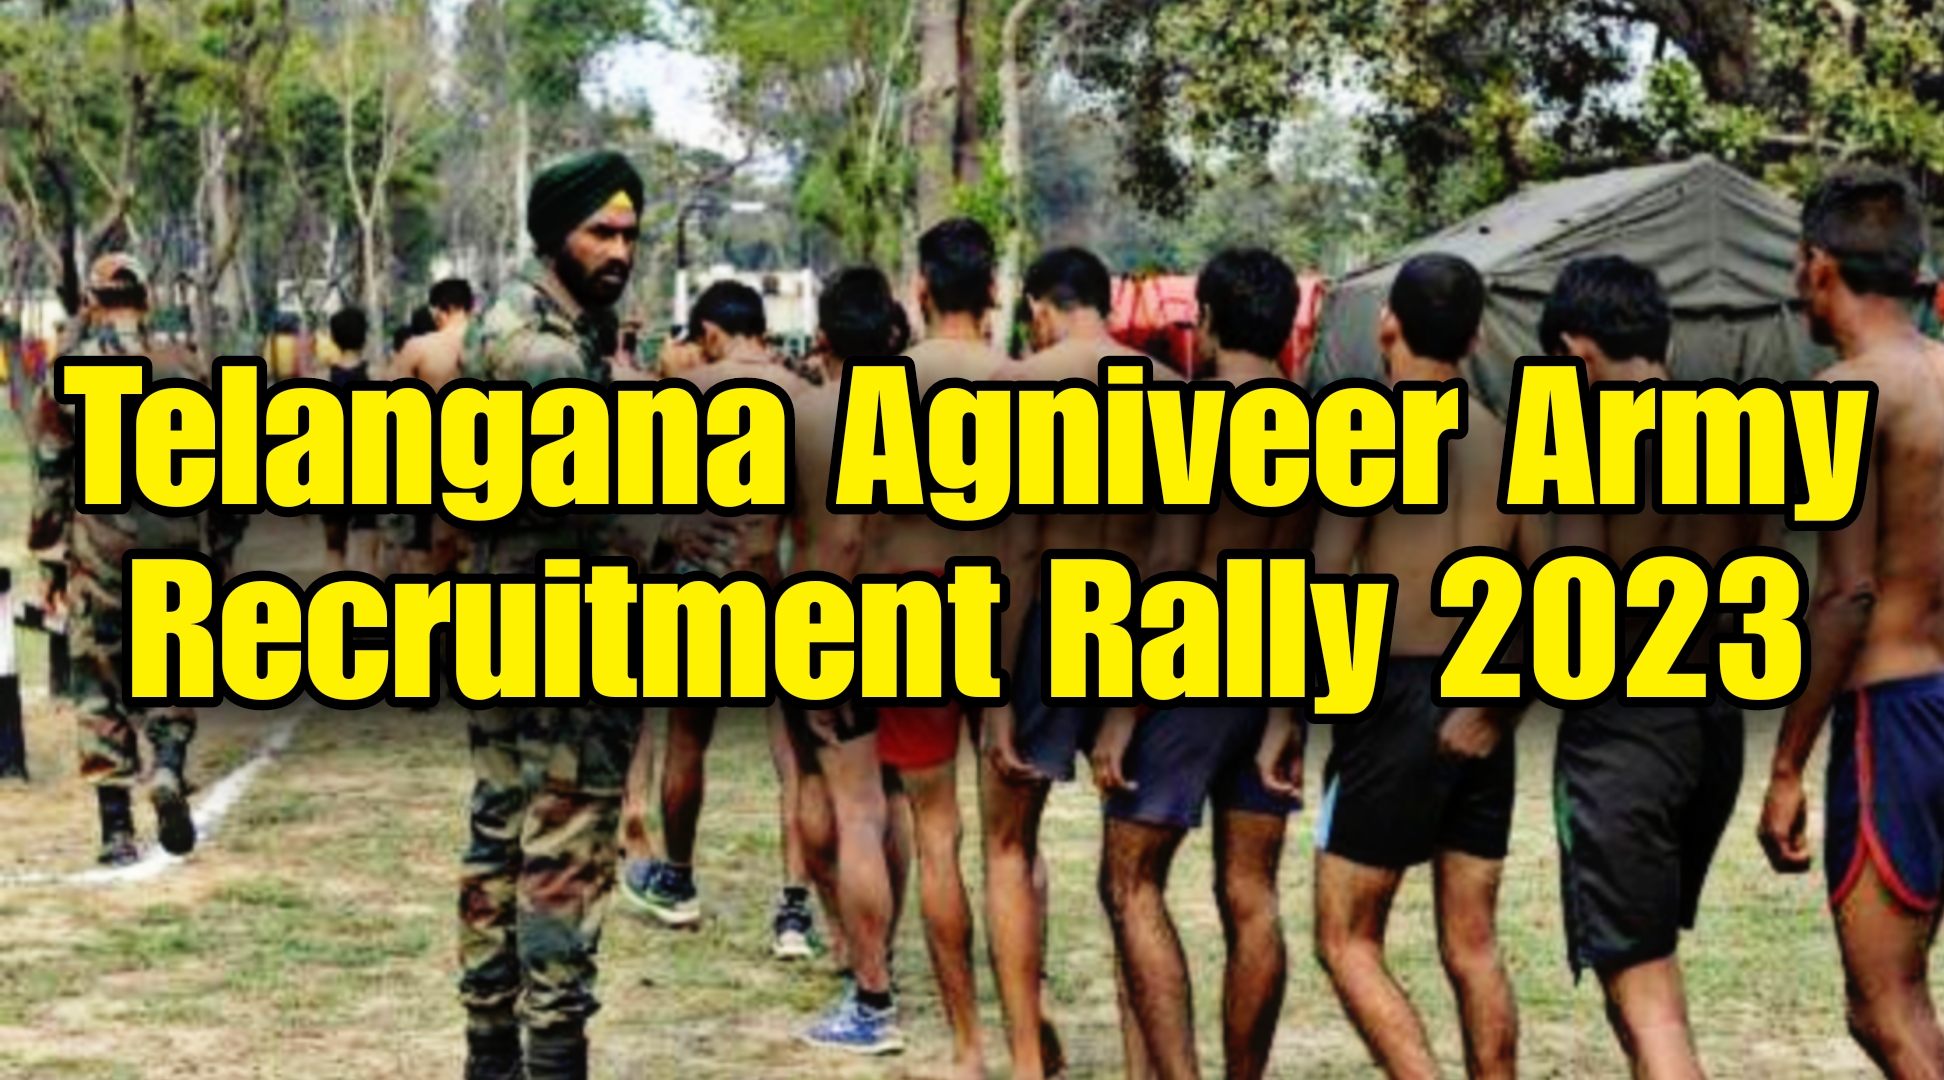 Telangana Agniveer Army Recruitment Rally 2023